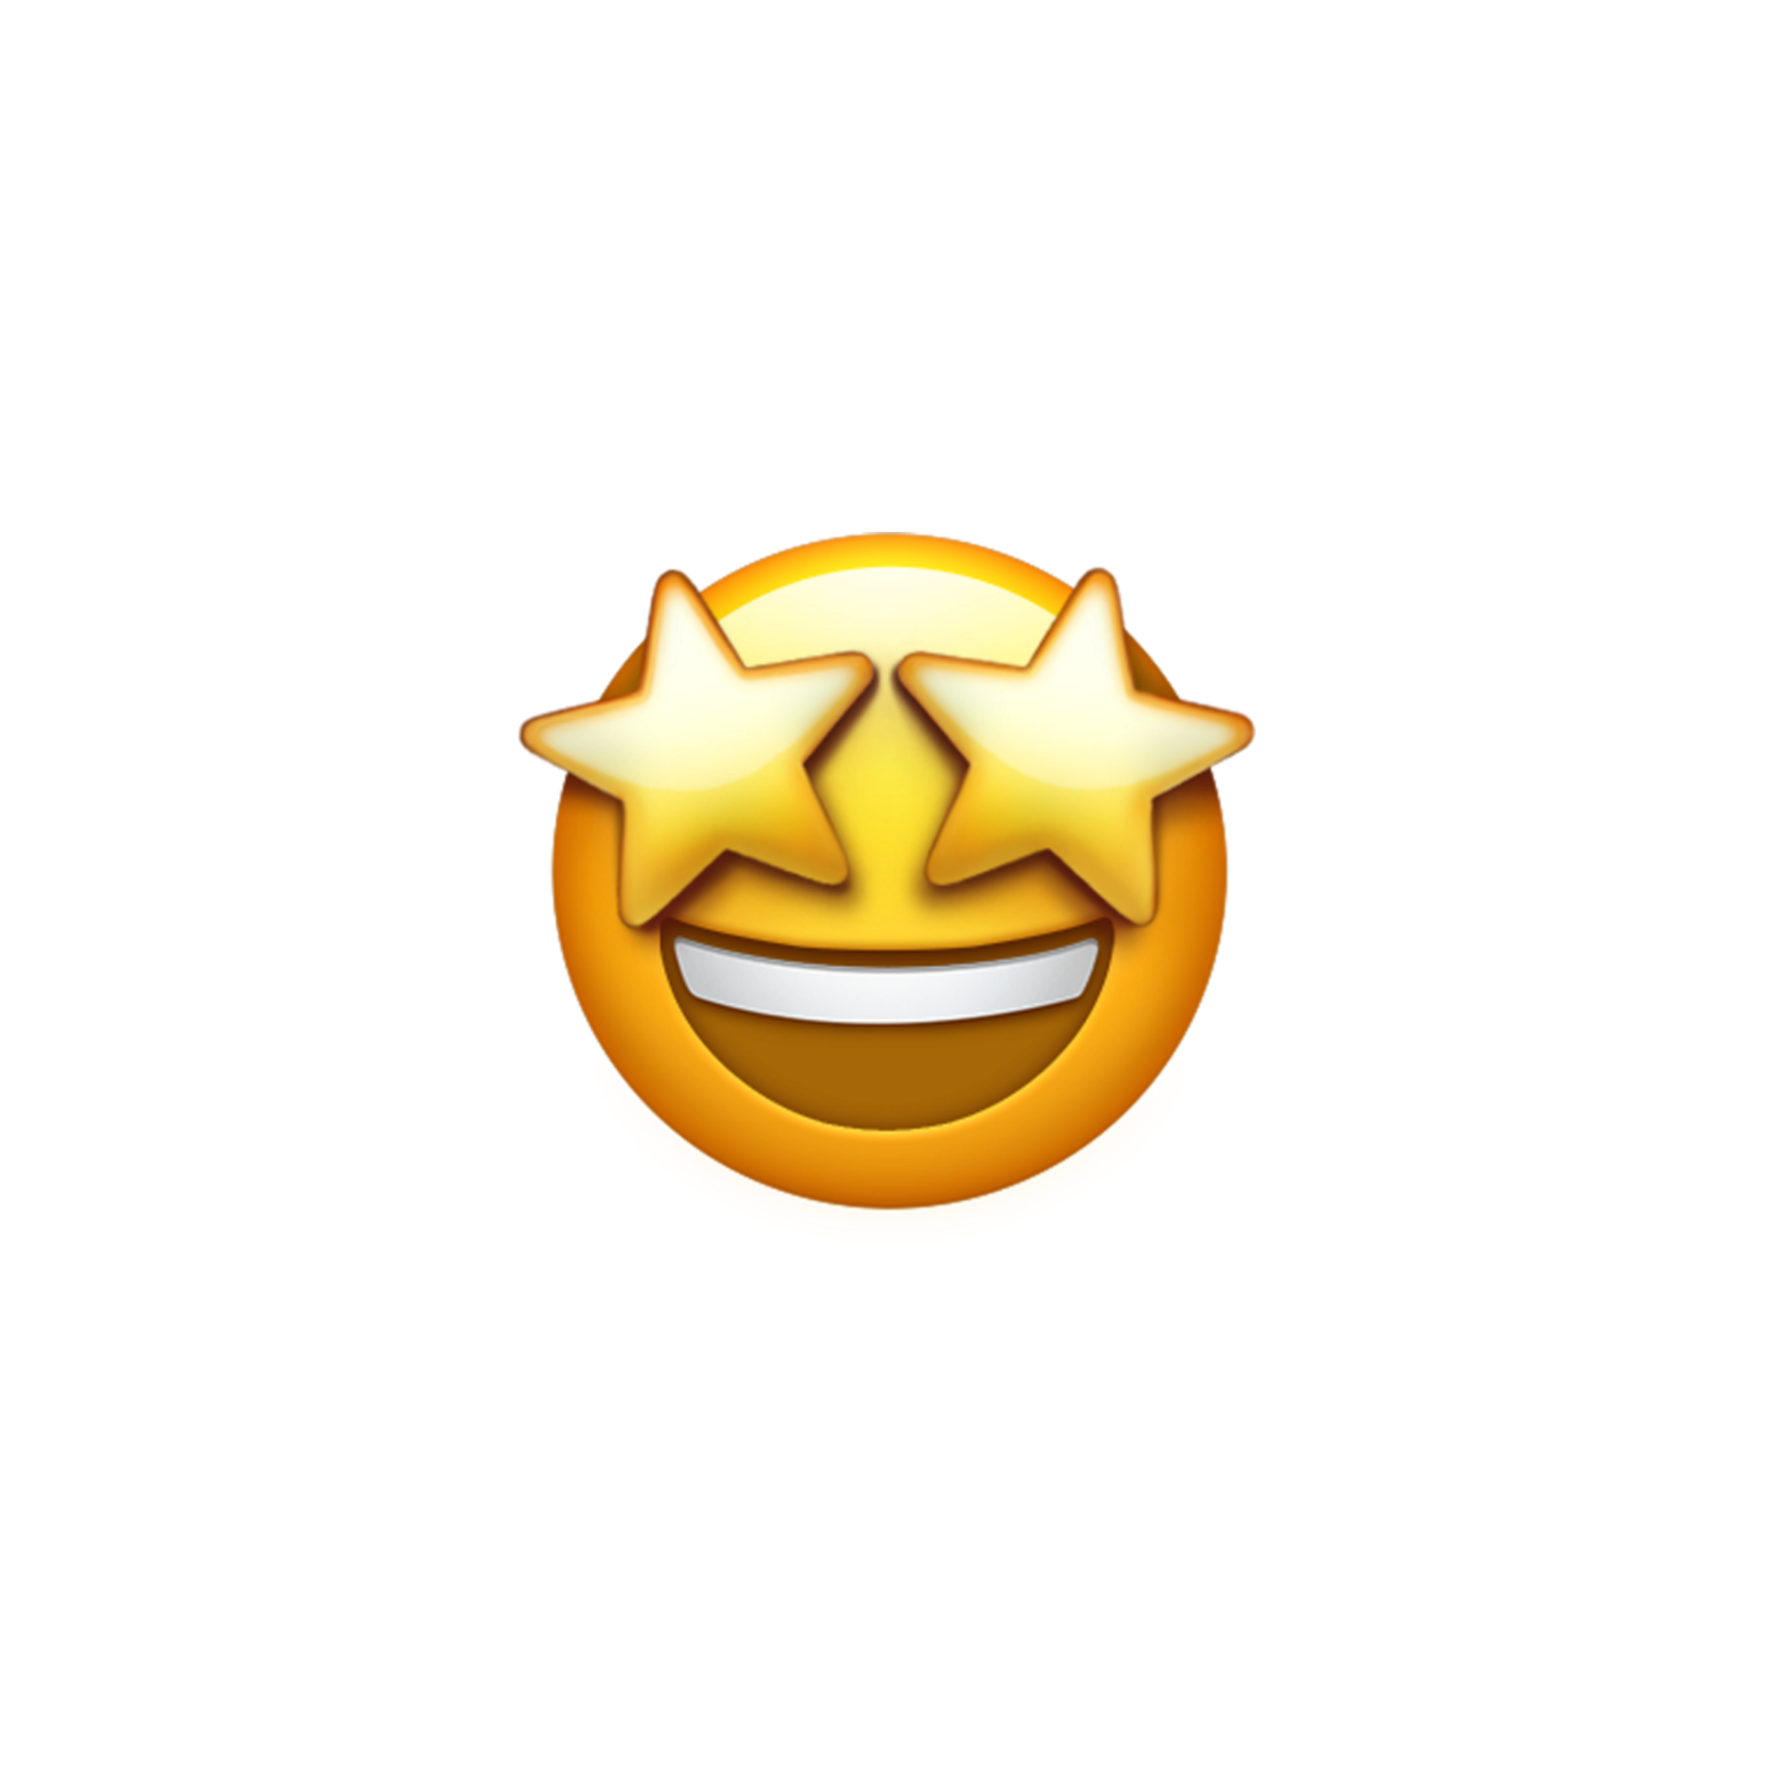 star yellow emoji iphone freetoedit sticker by @enquiesoft.